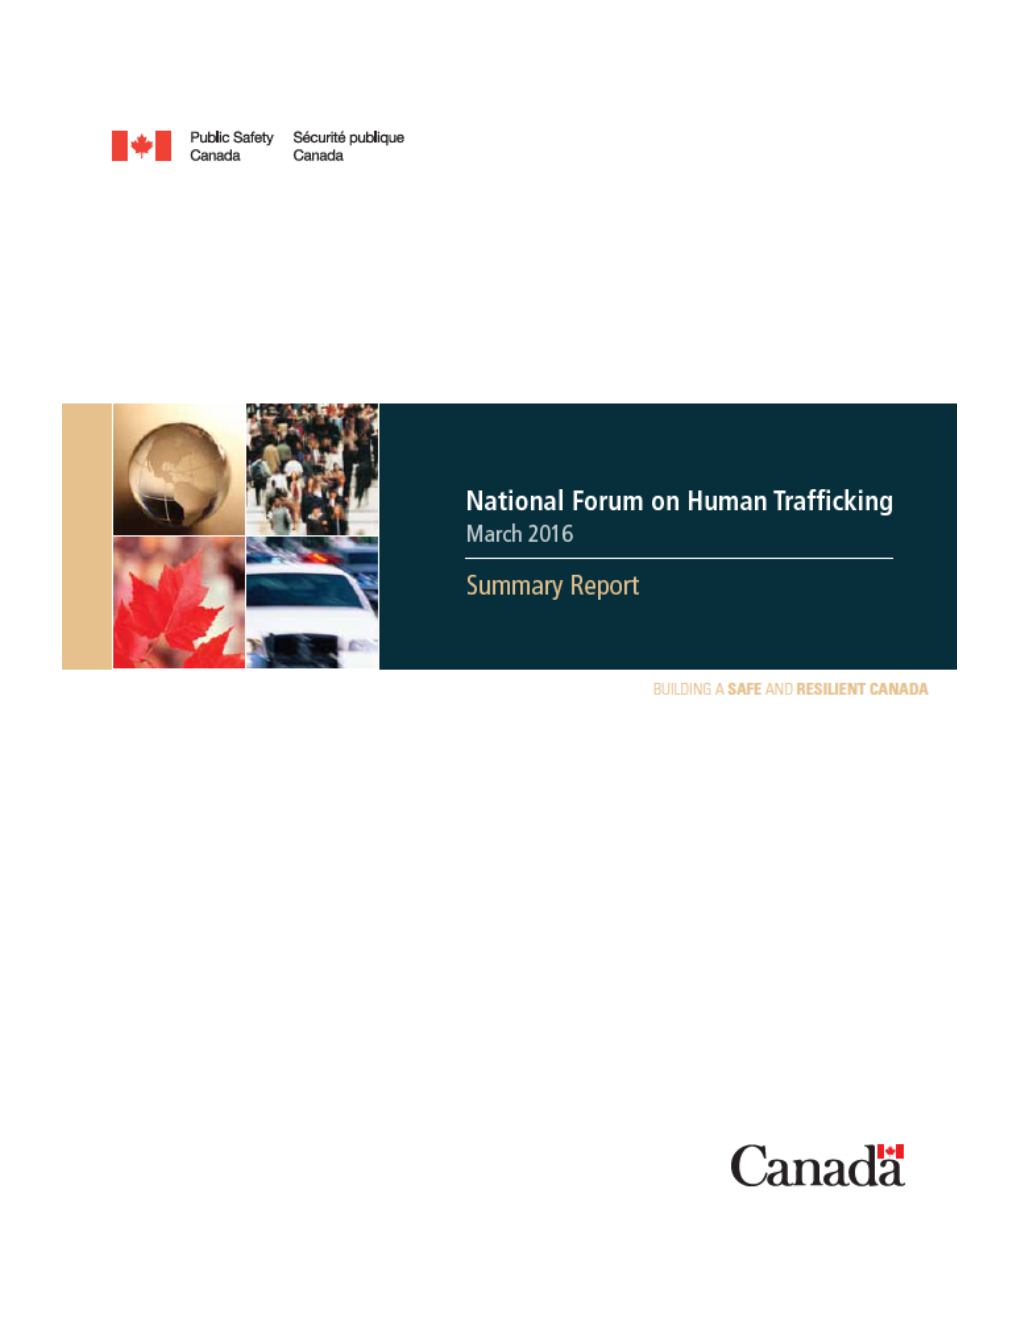 National Forum on Human Trafficking Executive Summary